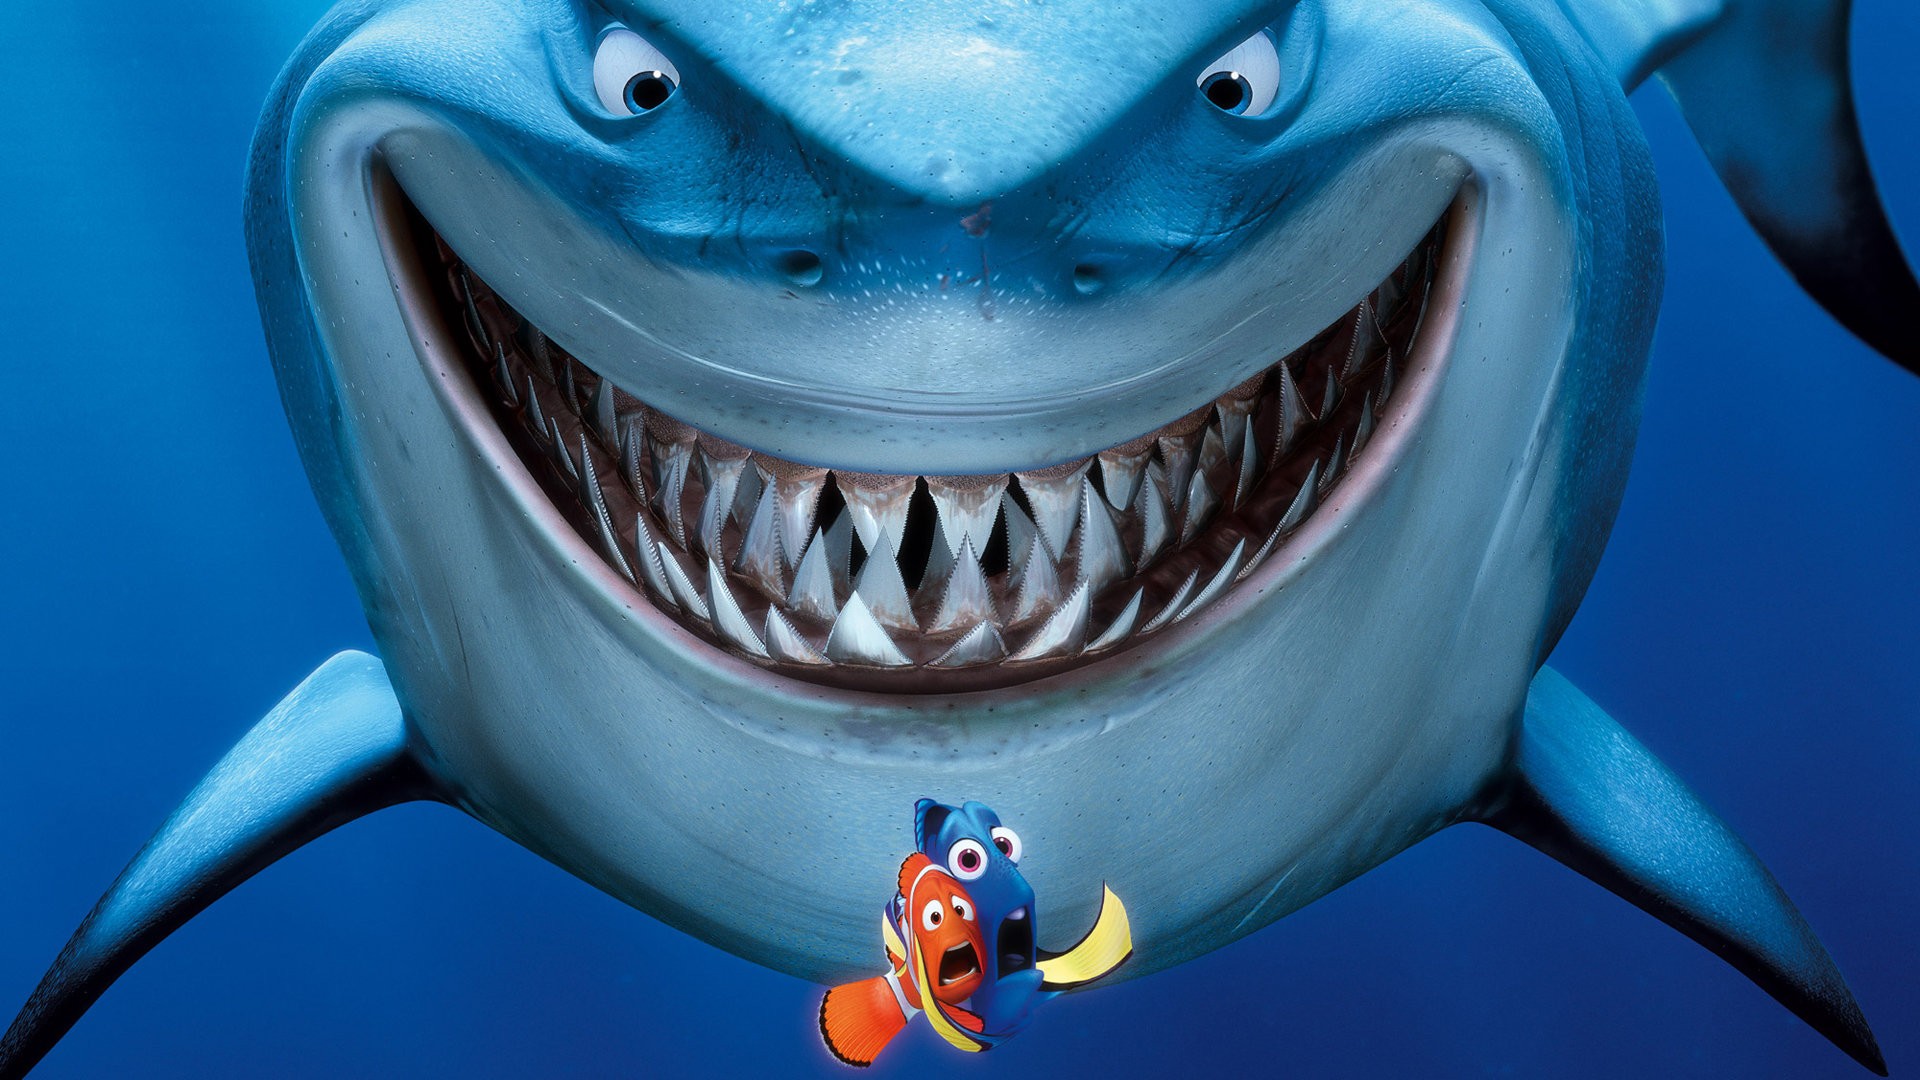 Wallpaper, illustration, shark, blue, underwater, Pixar Animation Studios, Disney Pixar, Finding Nemo, screenshot, computer wallpaper, marine biology, cartilaginous fish 1920x1080